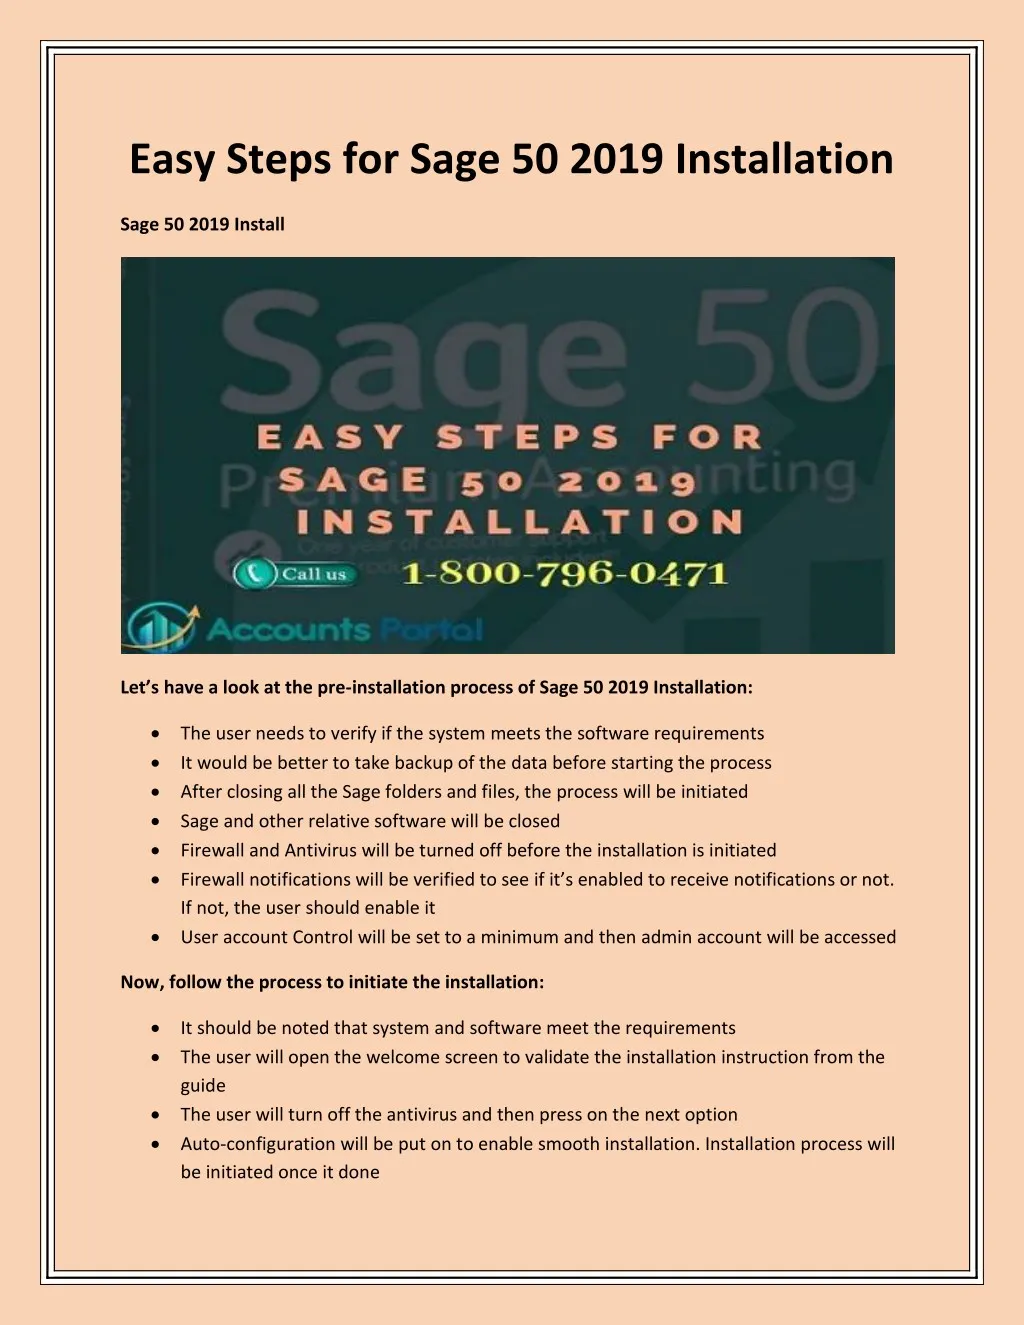 easy steps for sage 50 2019 installation